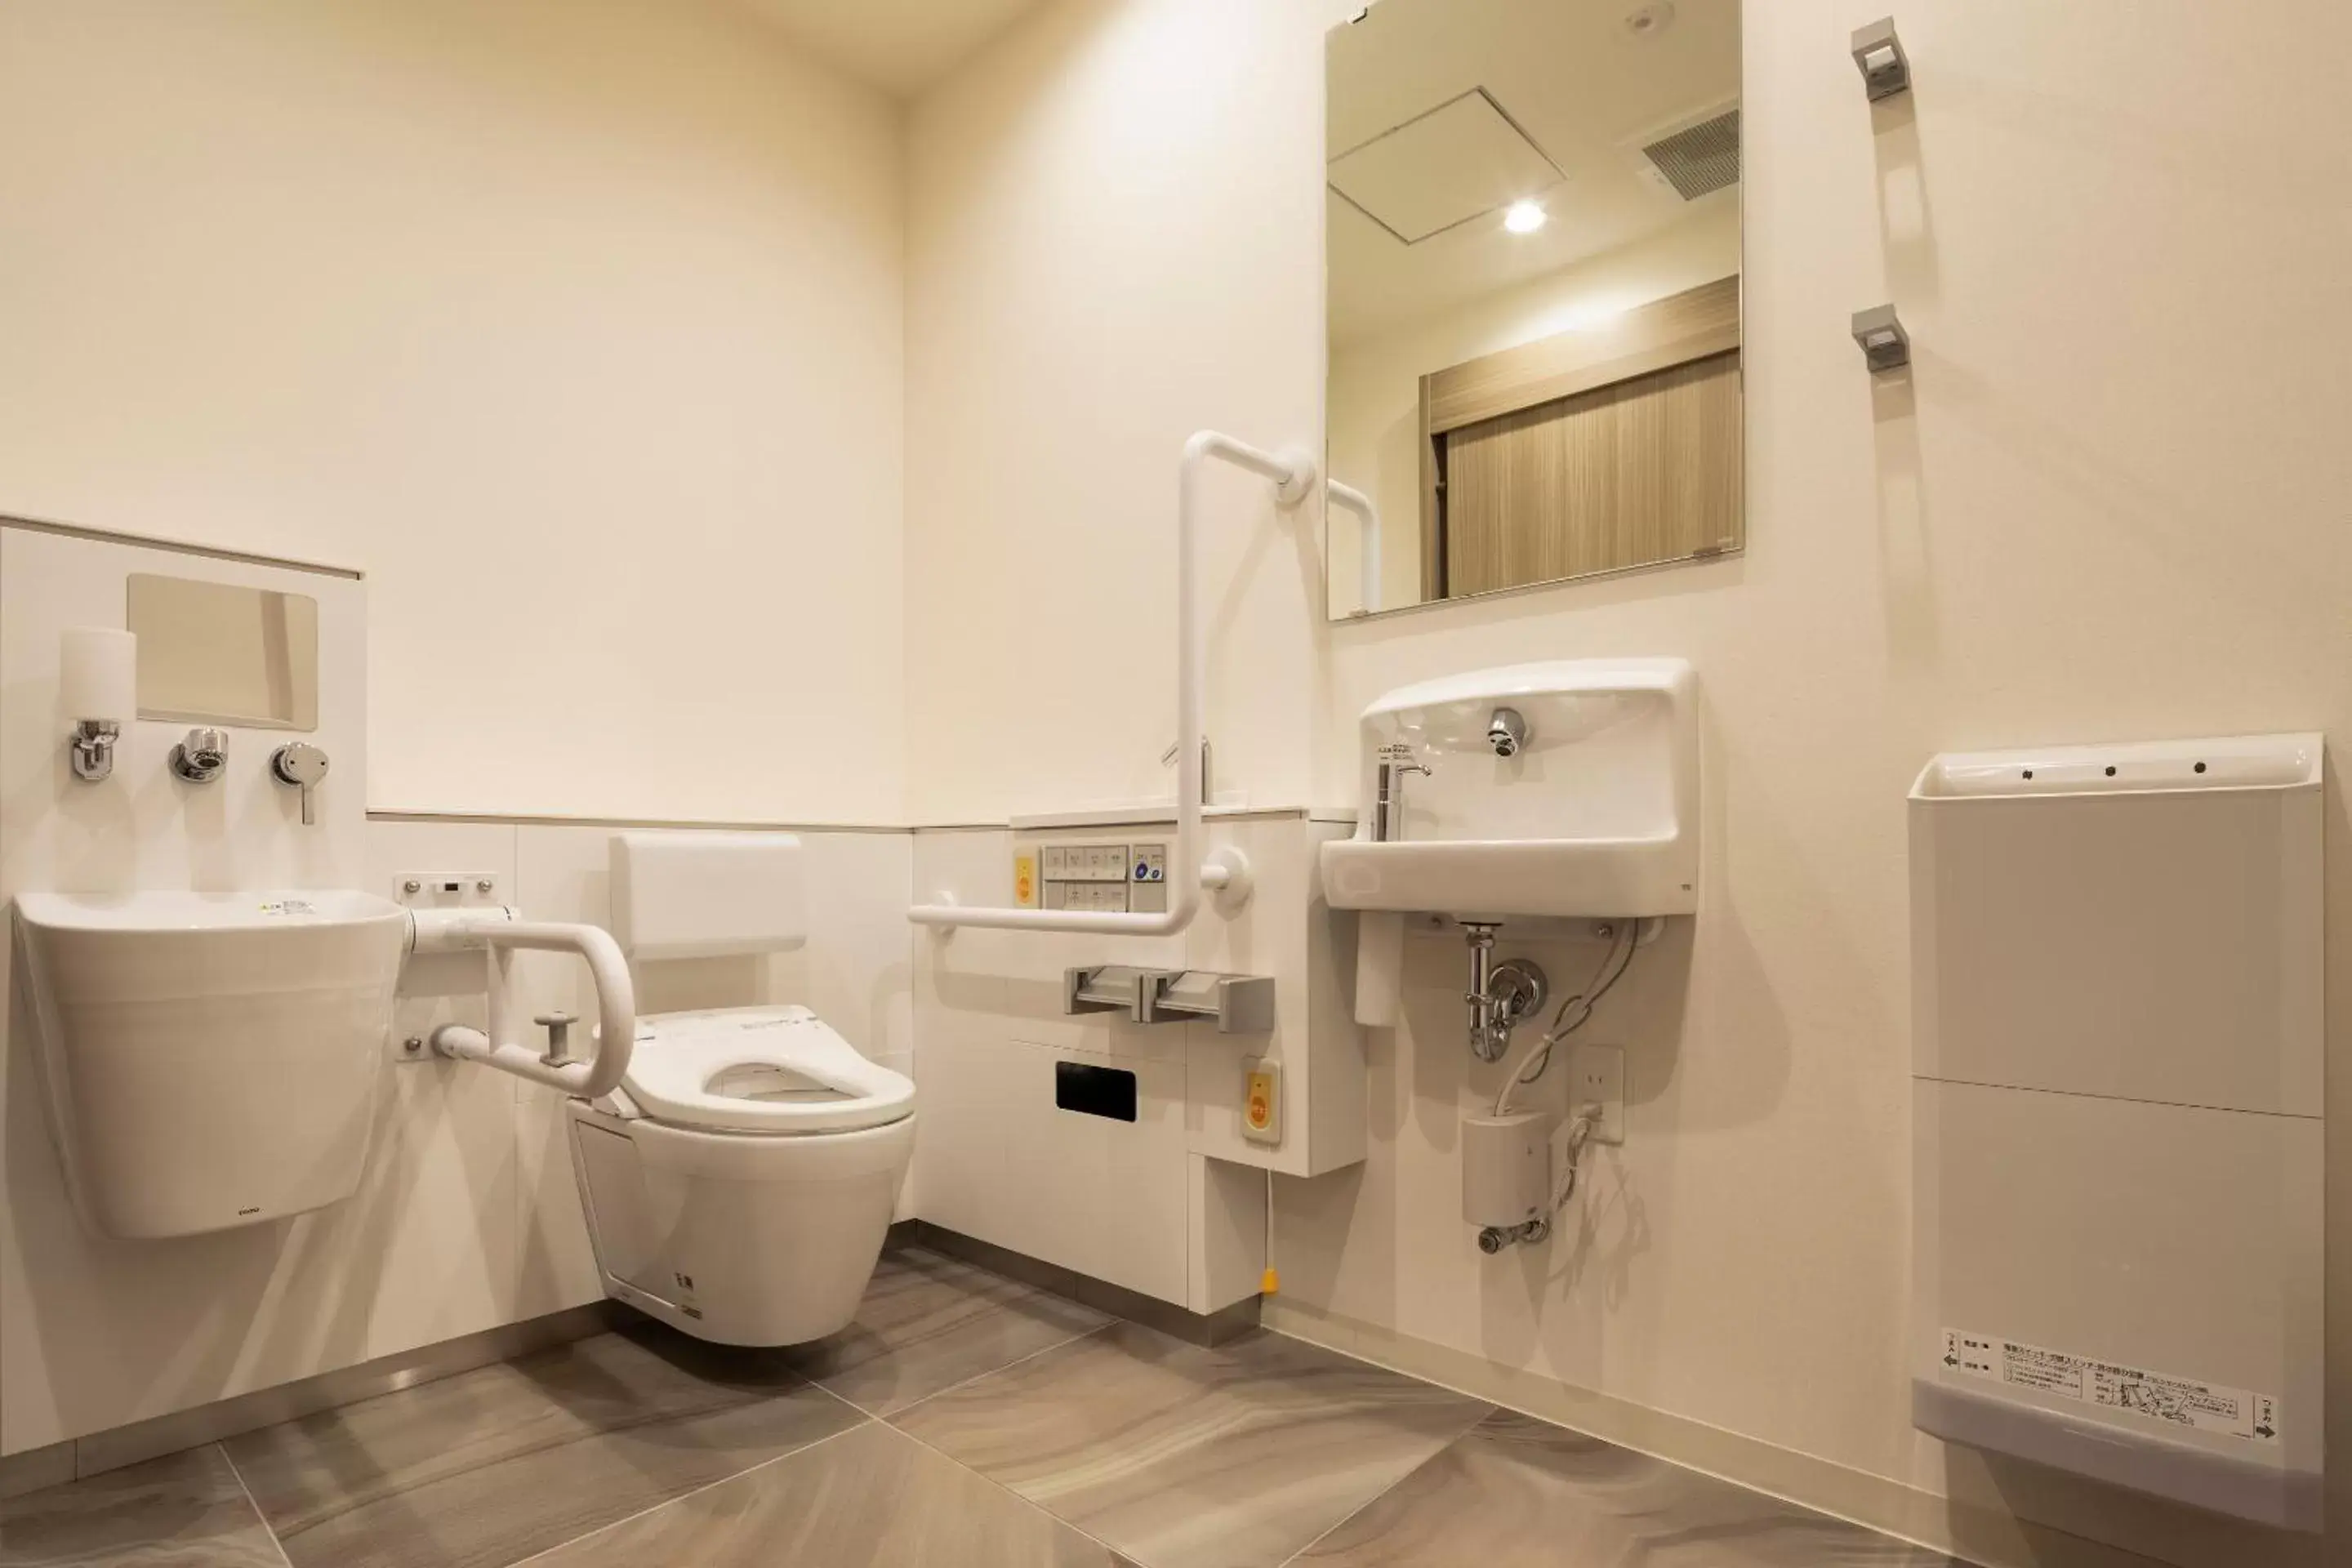 Area and facilities, Bathroom in SARASA HOTEL Dotonbori